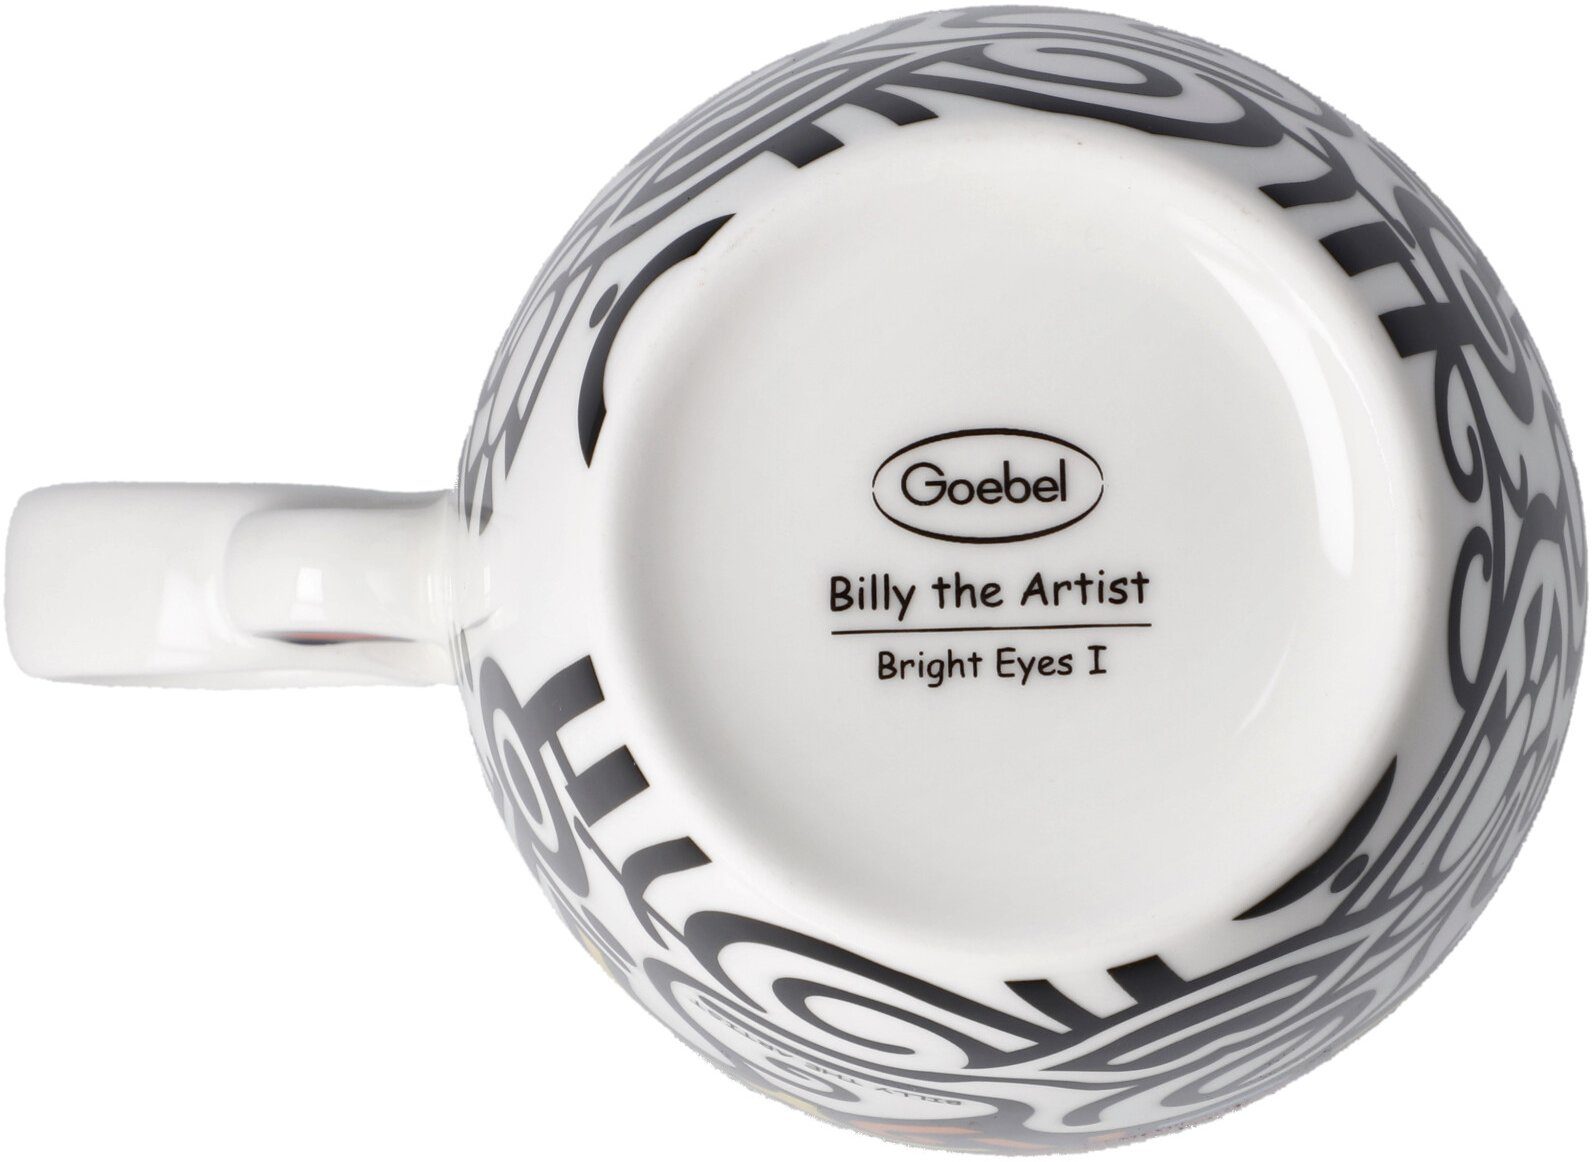 Artist Billy Billy - the Tasse The Art, Eyes I Artist, Bright Porzellan, Goebel Pop Künstlertasse,